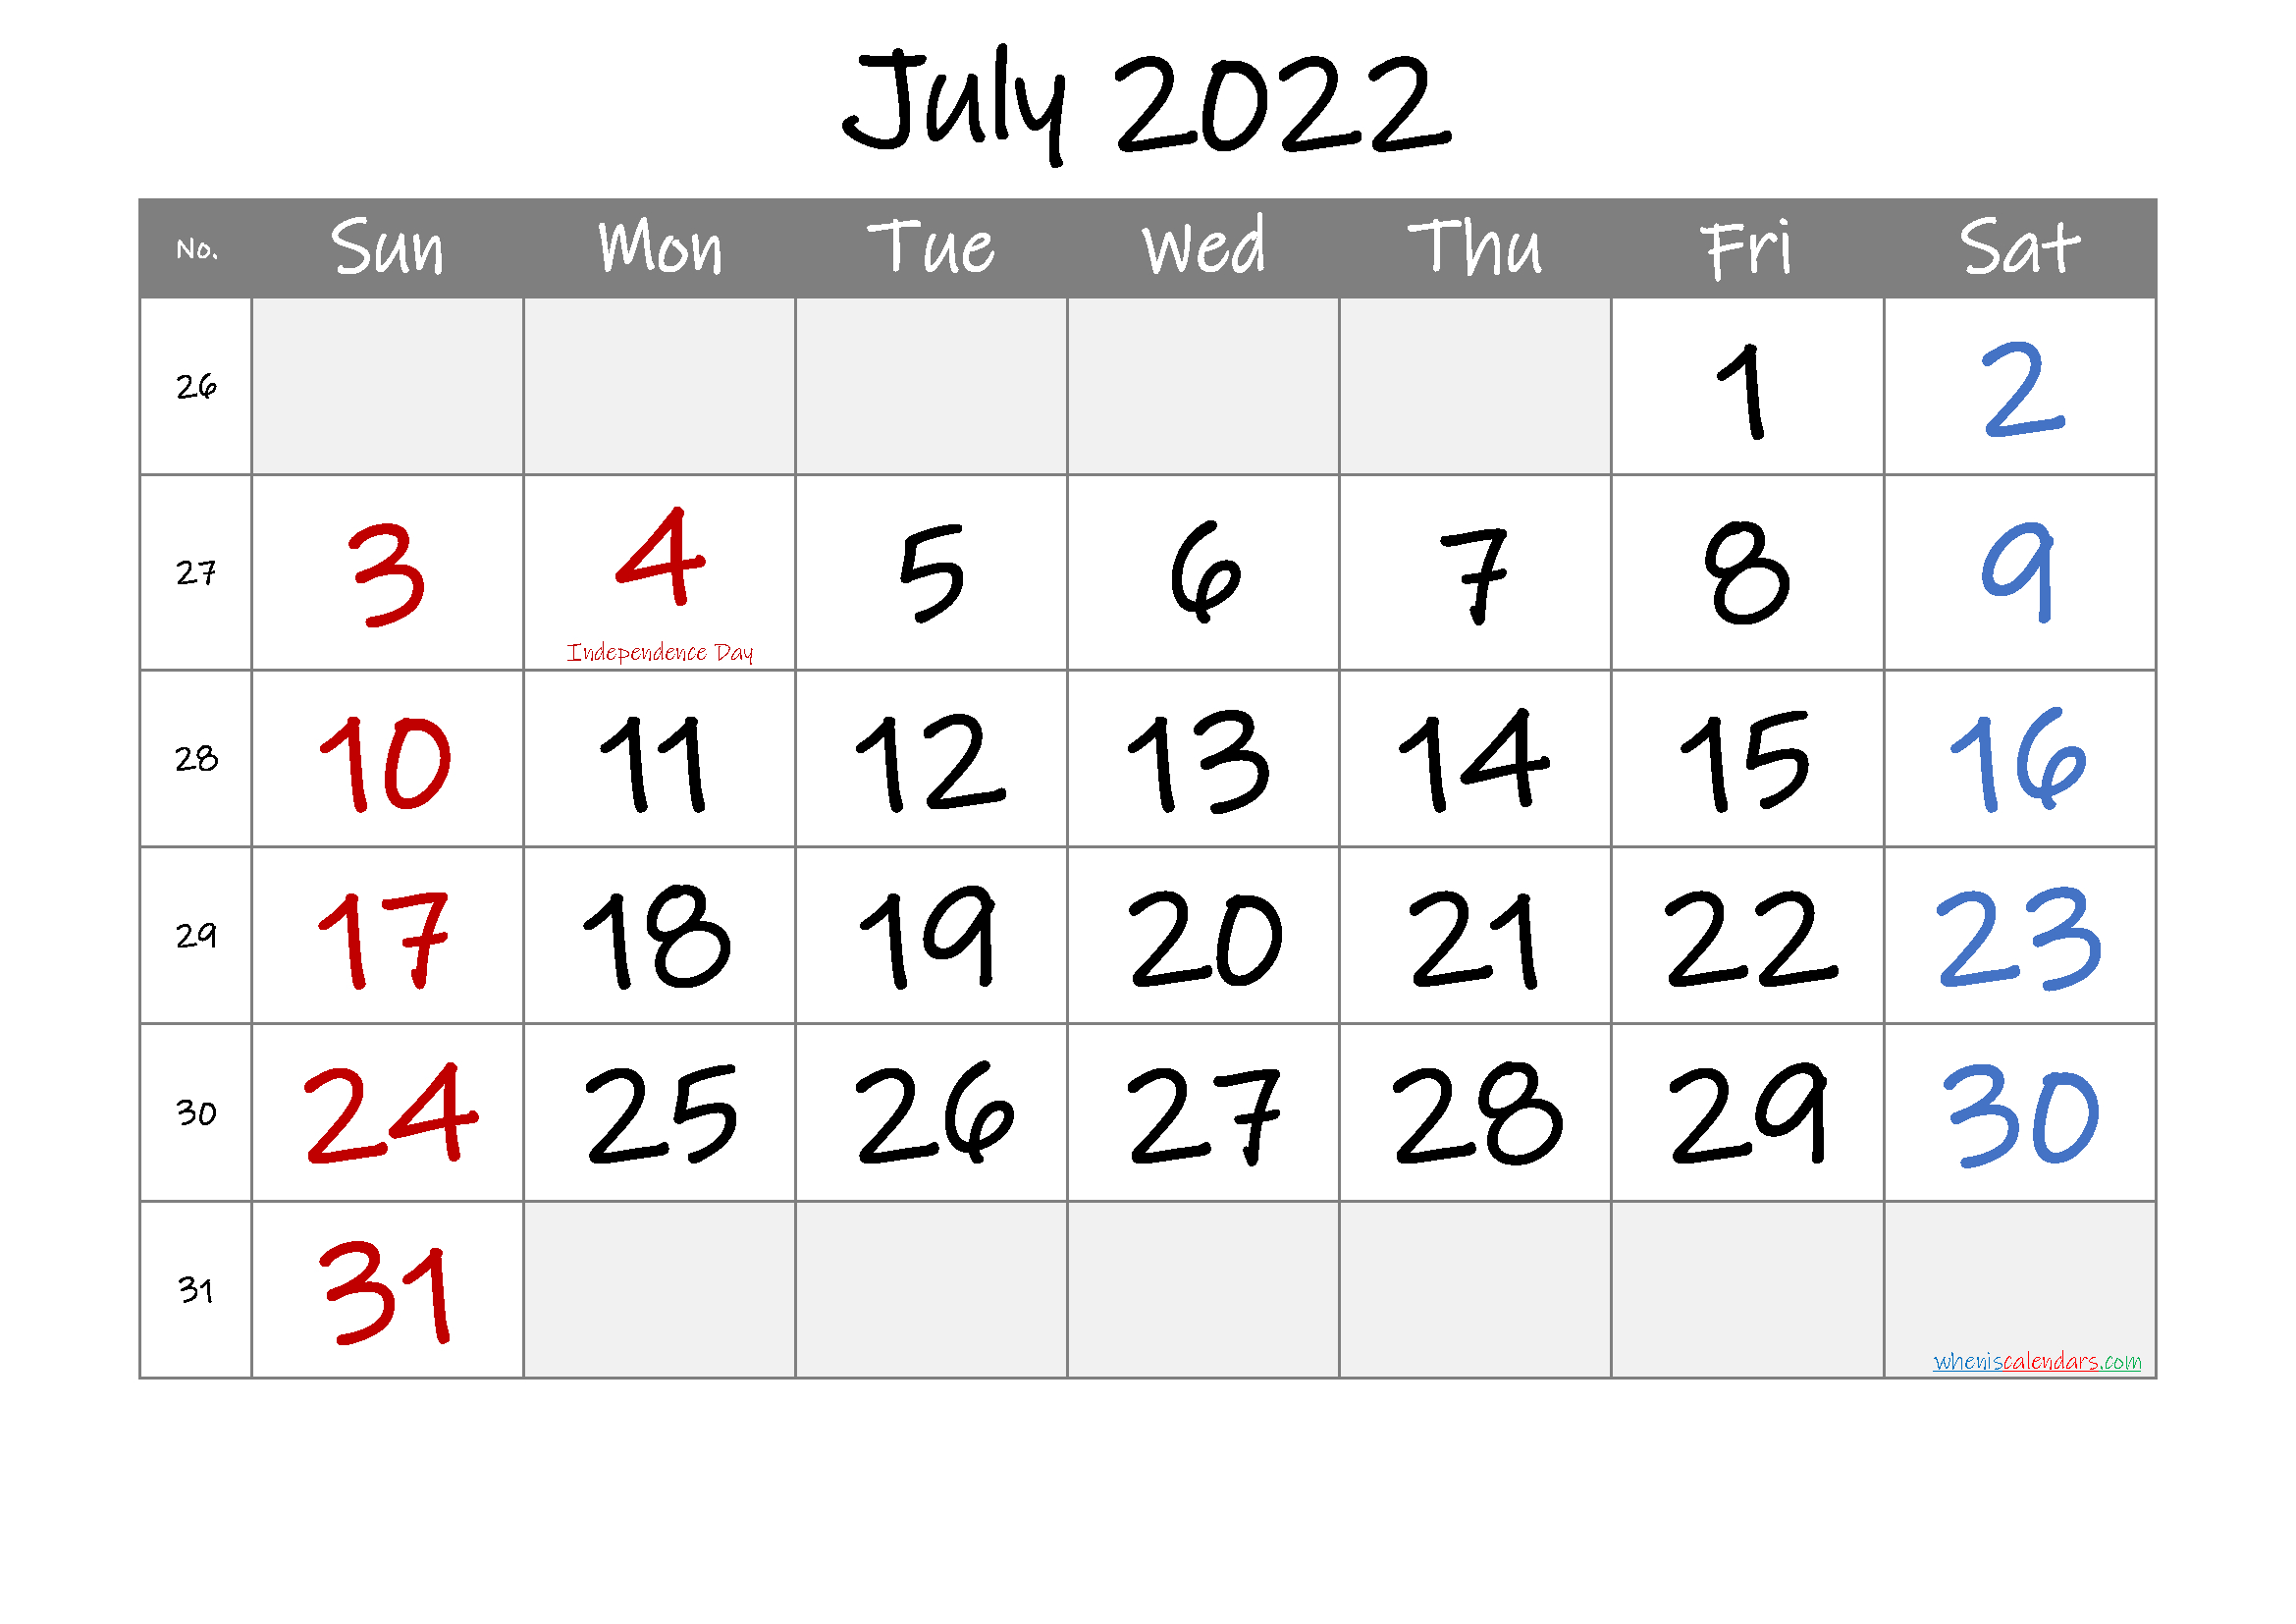 Catch July 2022 Blank Calendar